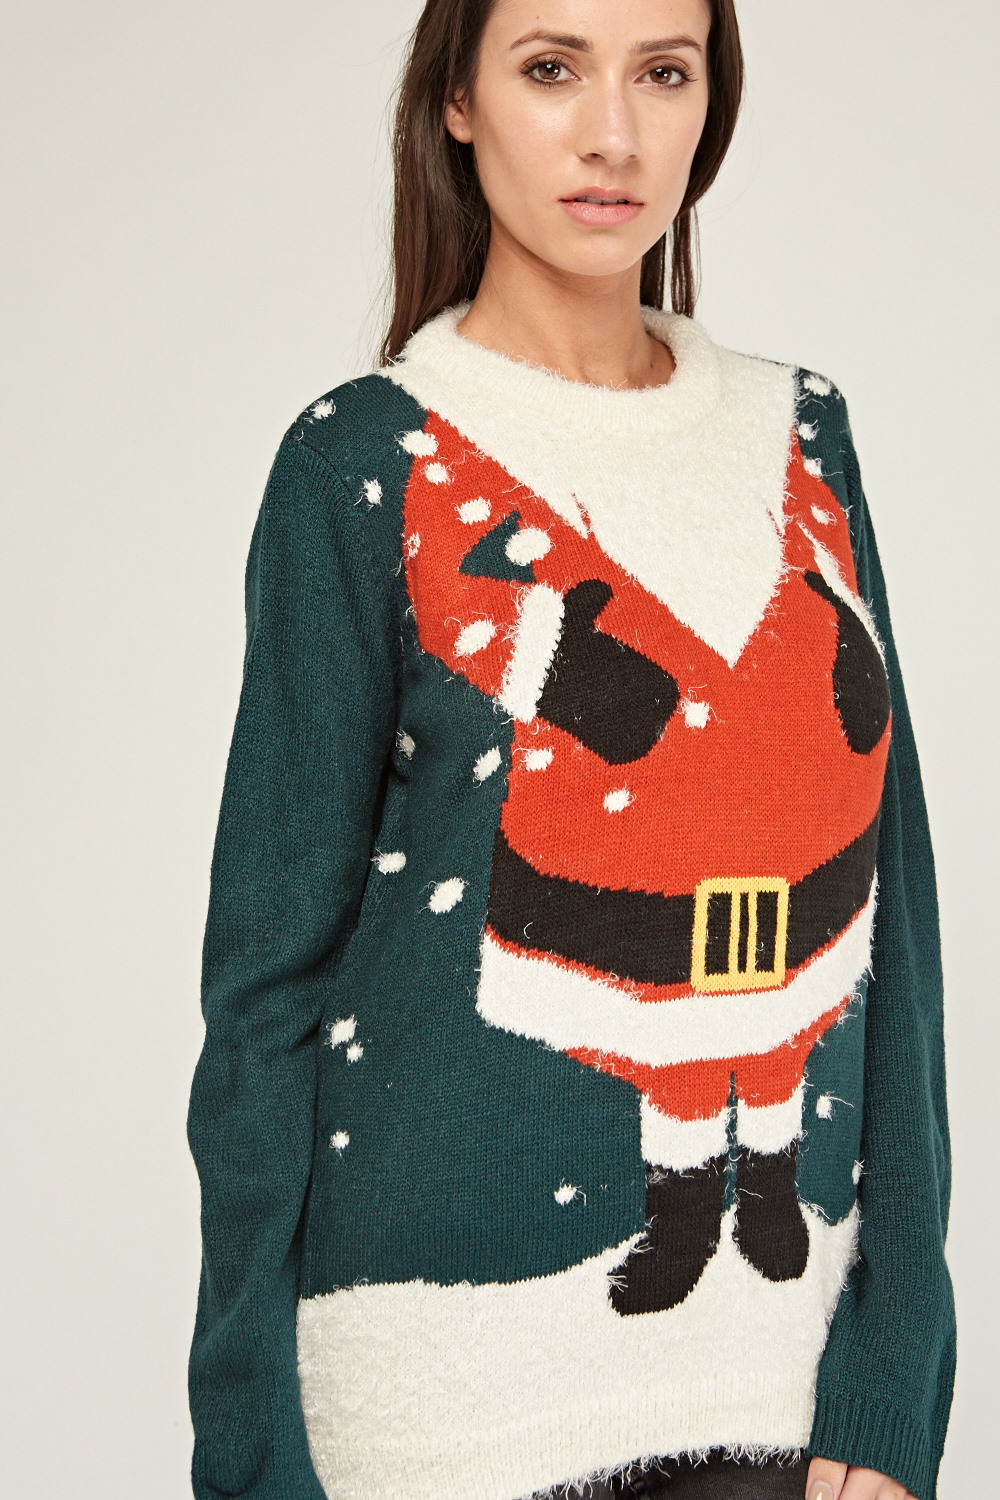 Santa Claus Christmas Knit Jumper - Just $6